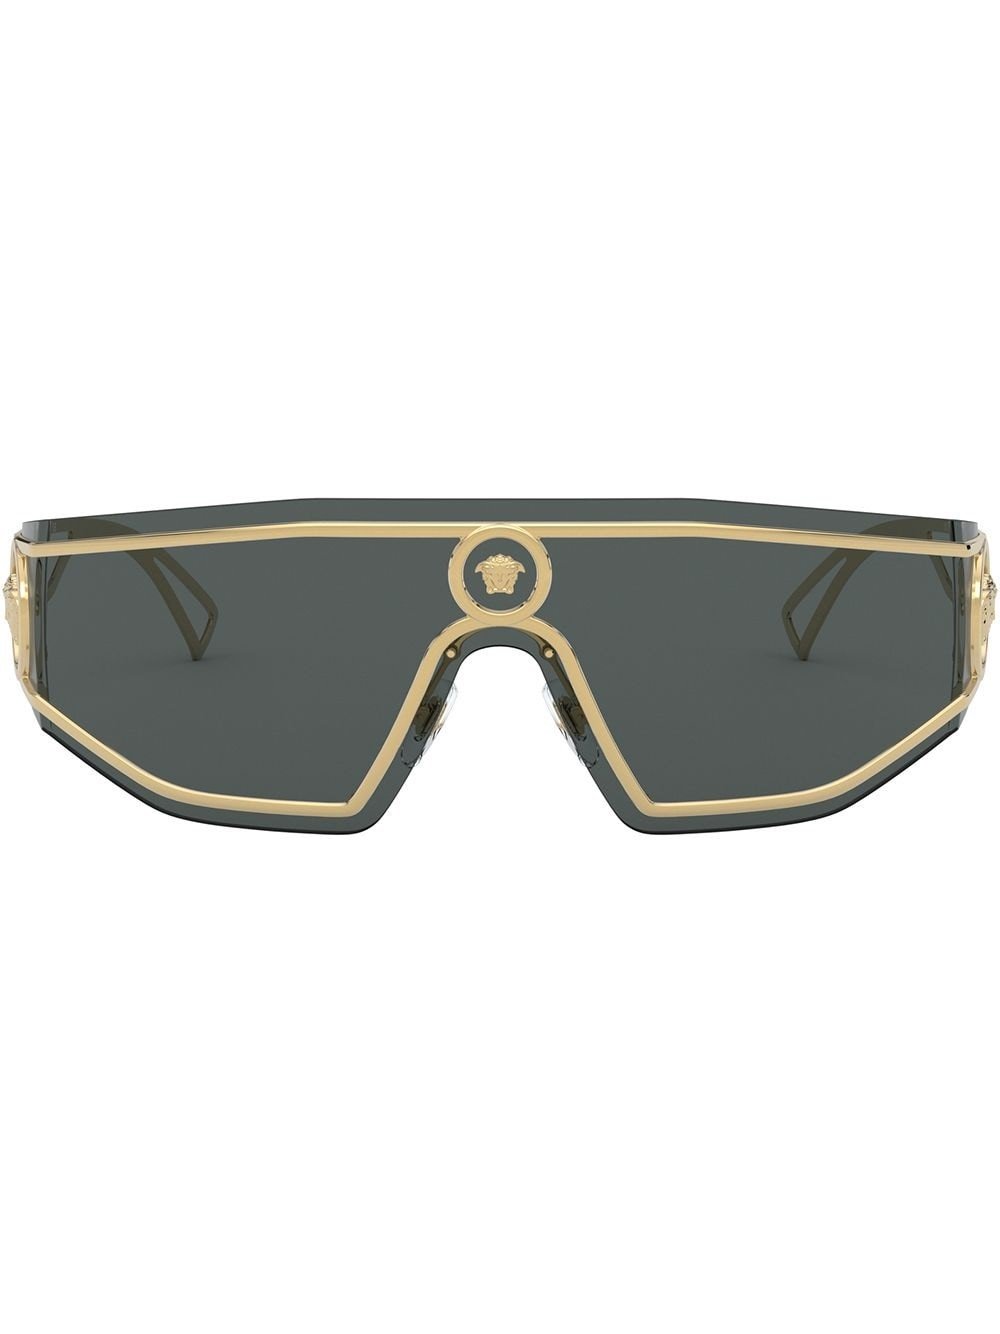 VERSACE VE2226 Metal Sunglasses - André Opticas